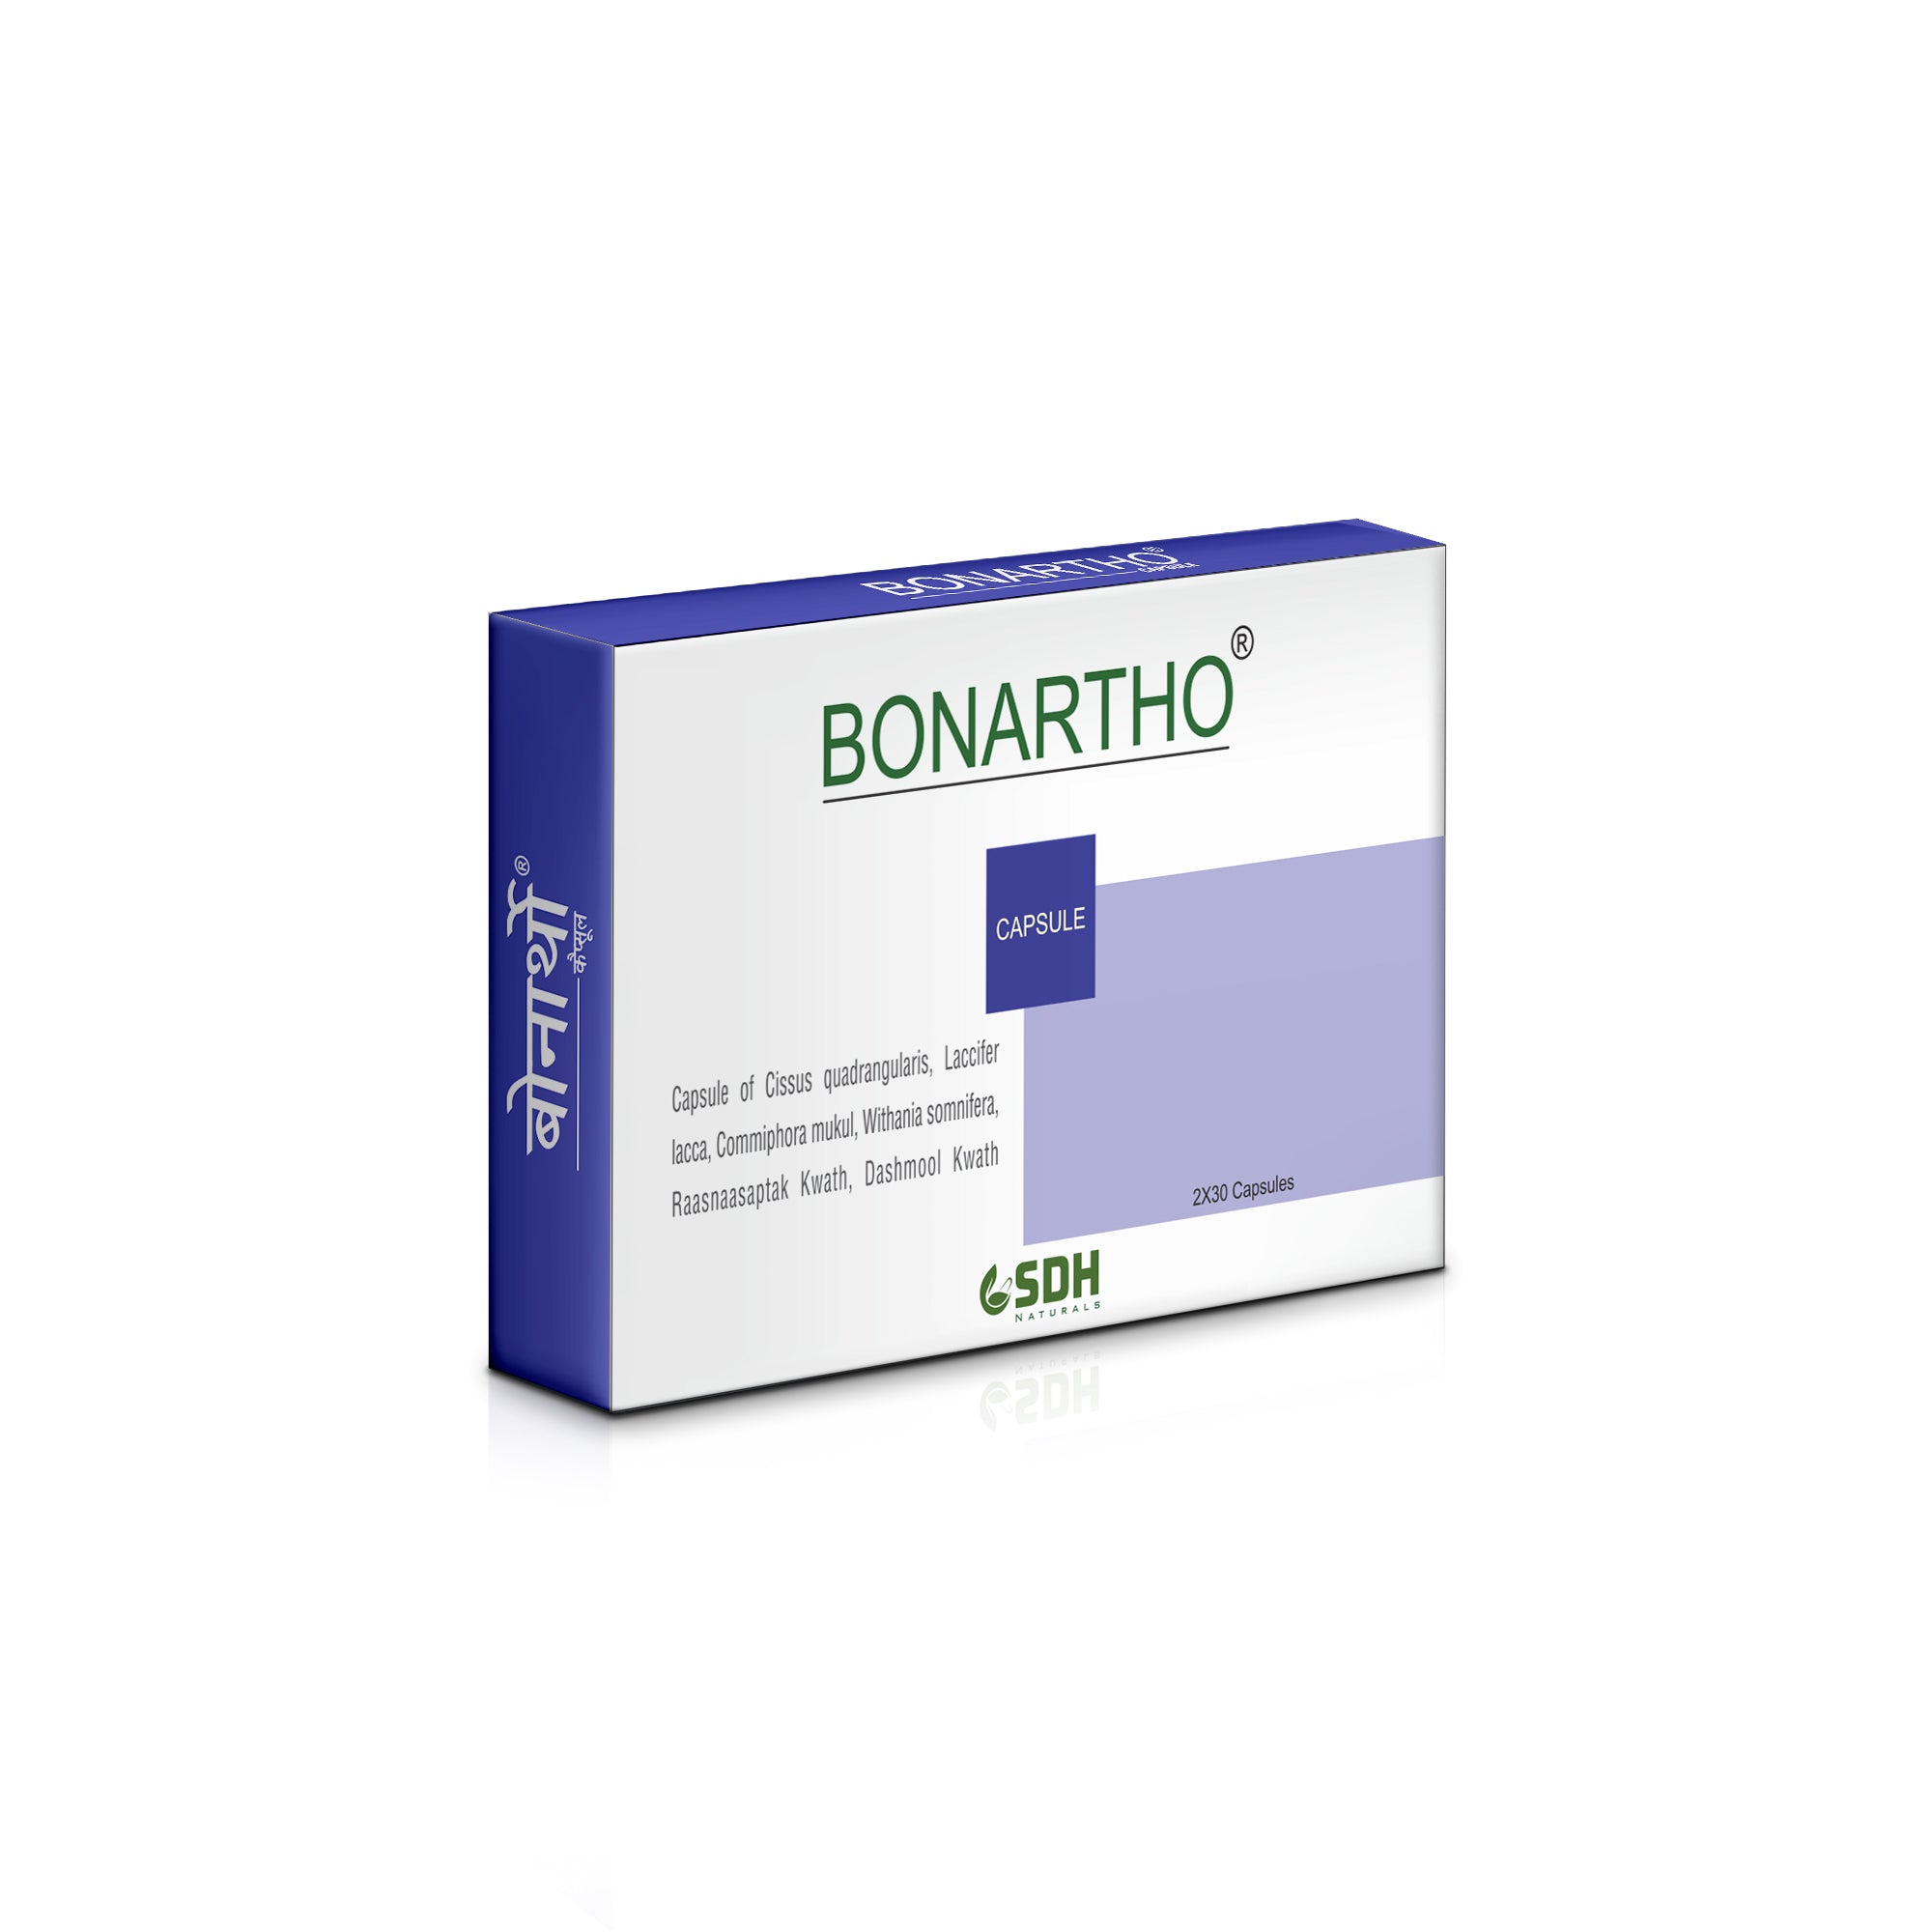 Bonartho Capsule - Best Joint Pain Supplement